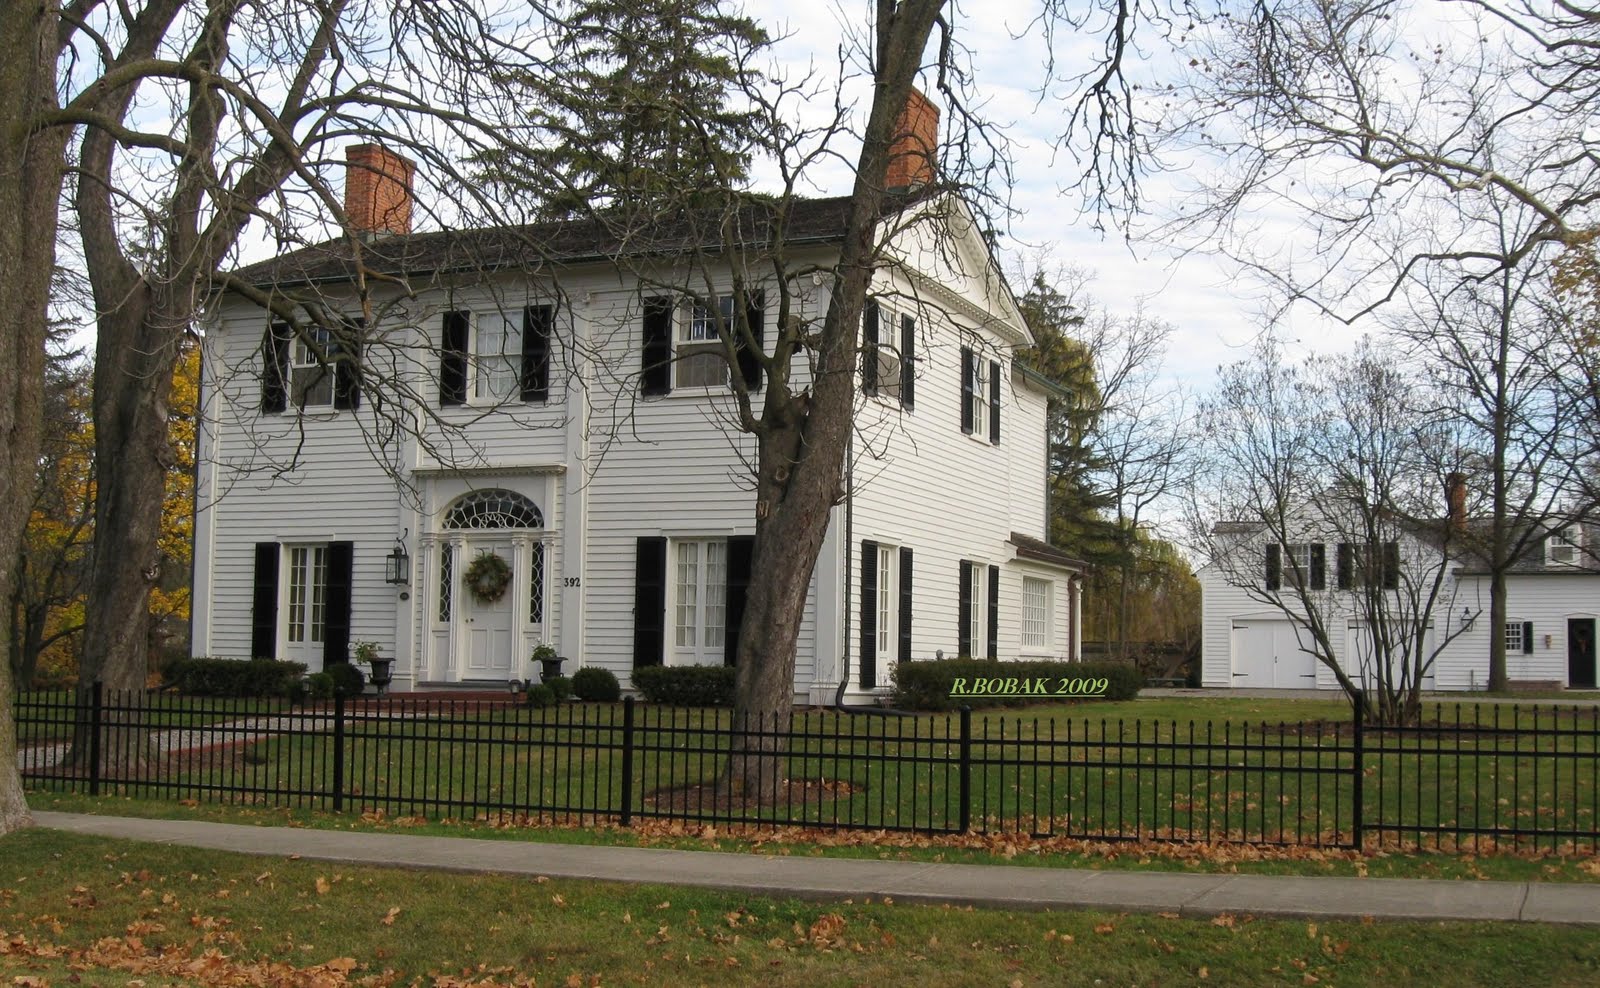 The Hawley Breckenridge House 1816